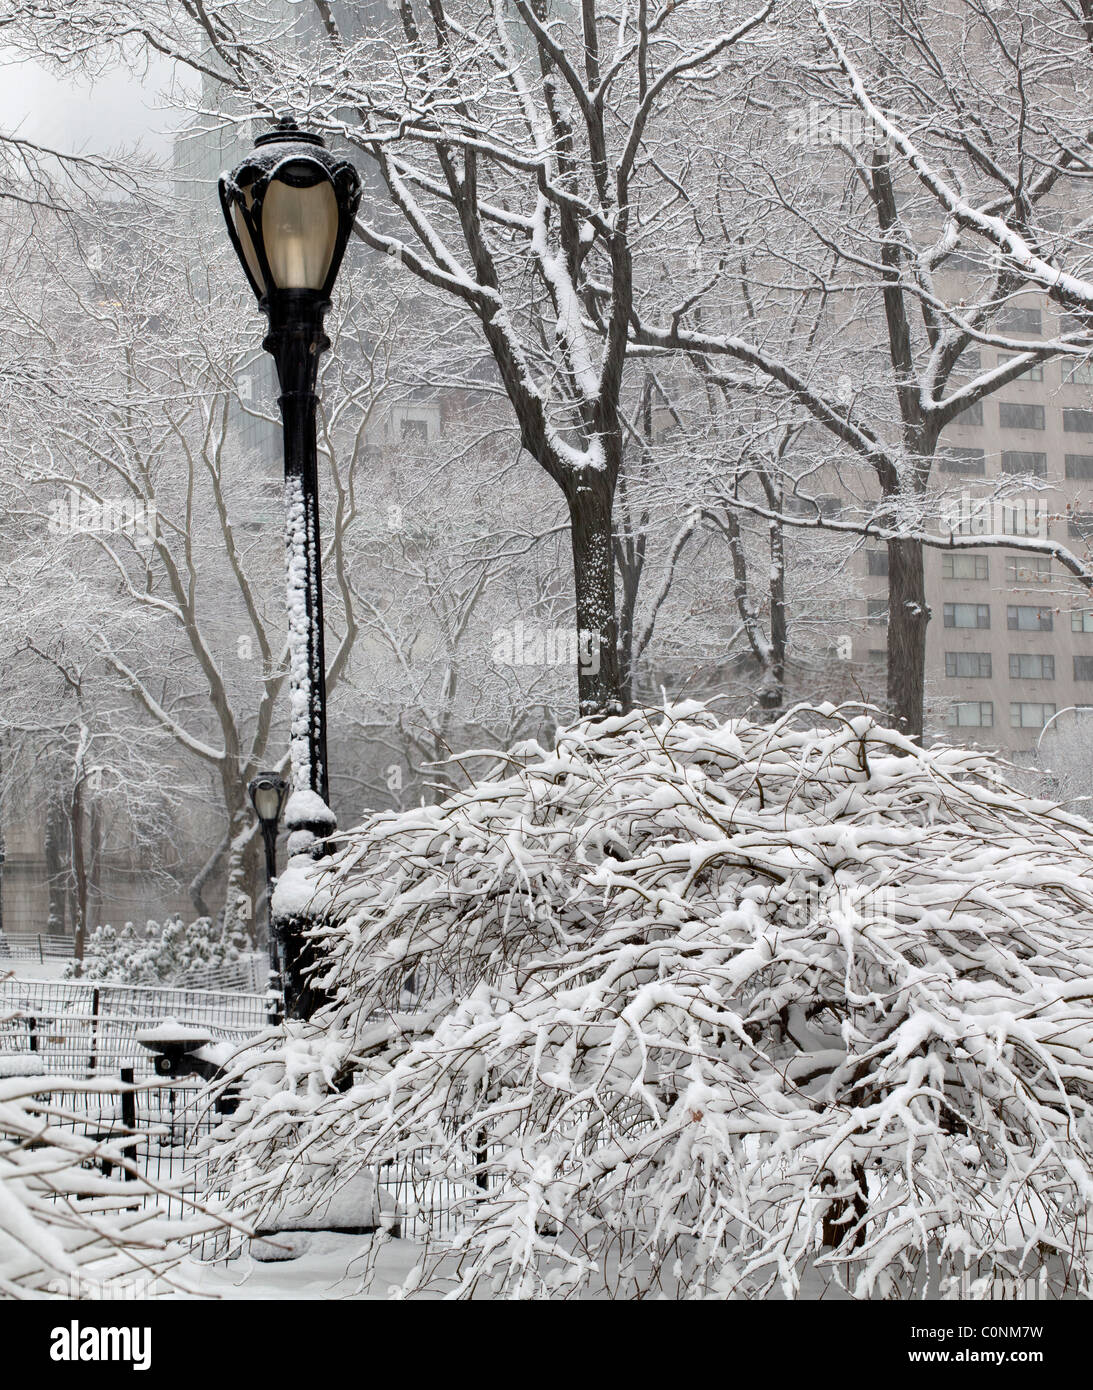 Central Park - New York City snow storm Stock Photo